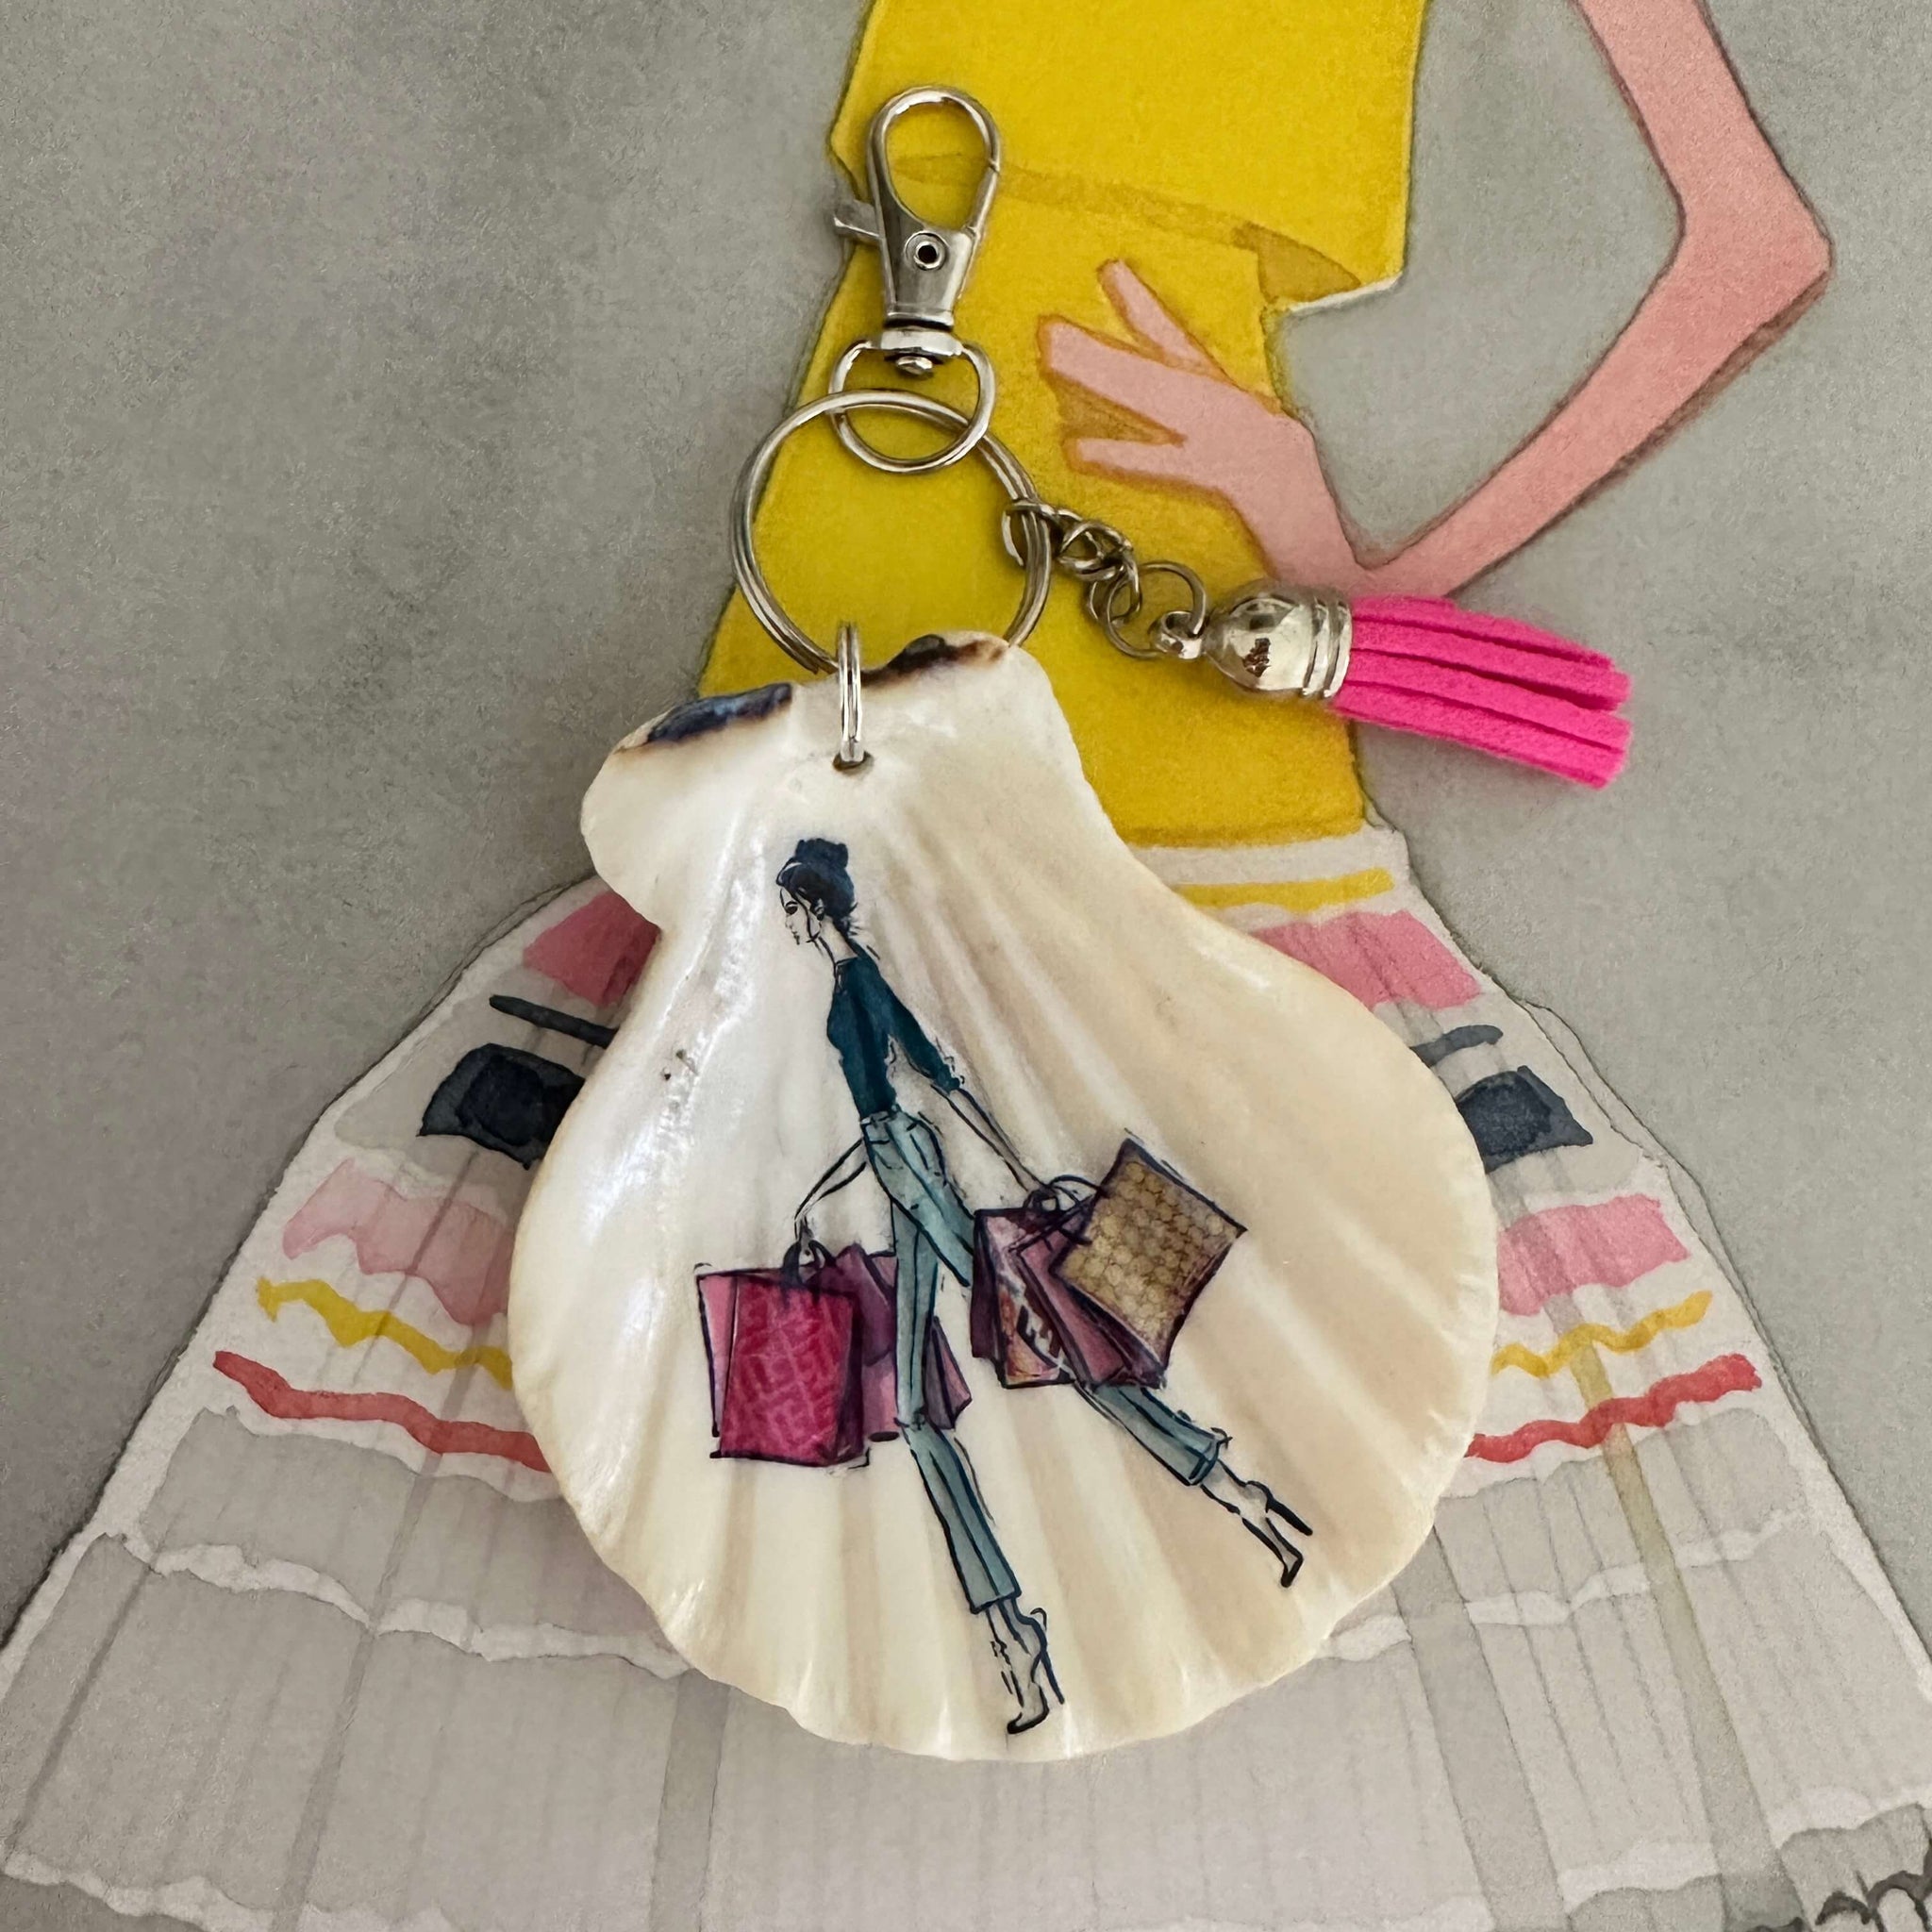 Schlüsselanhänger "Shopping Girl", in zwei Farben